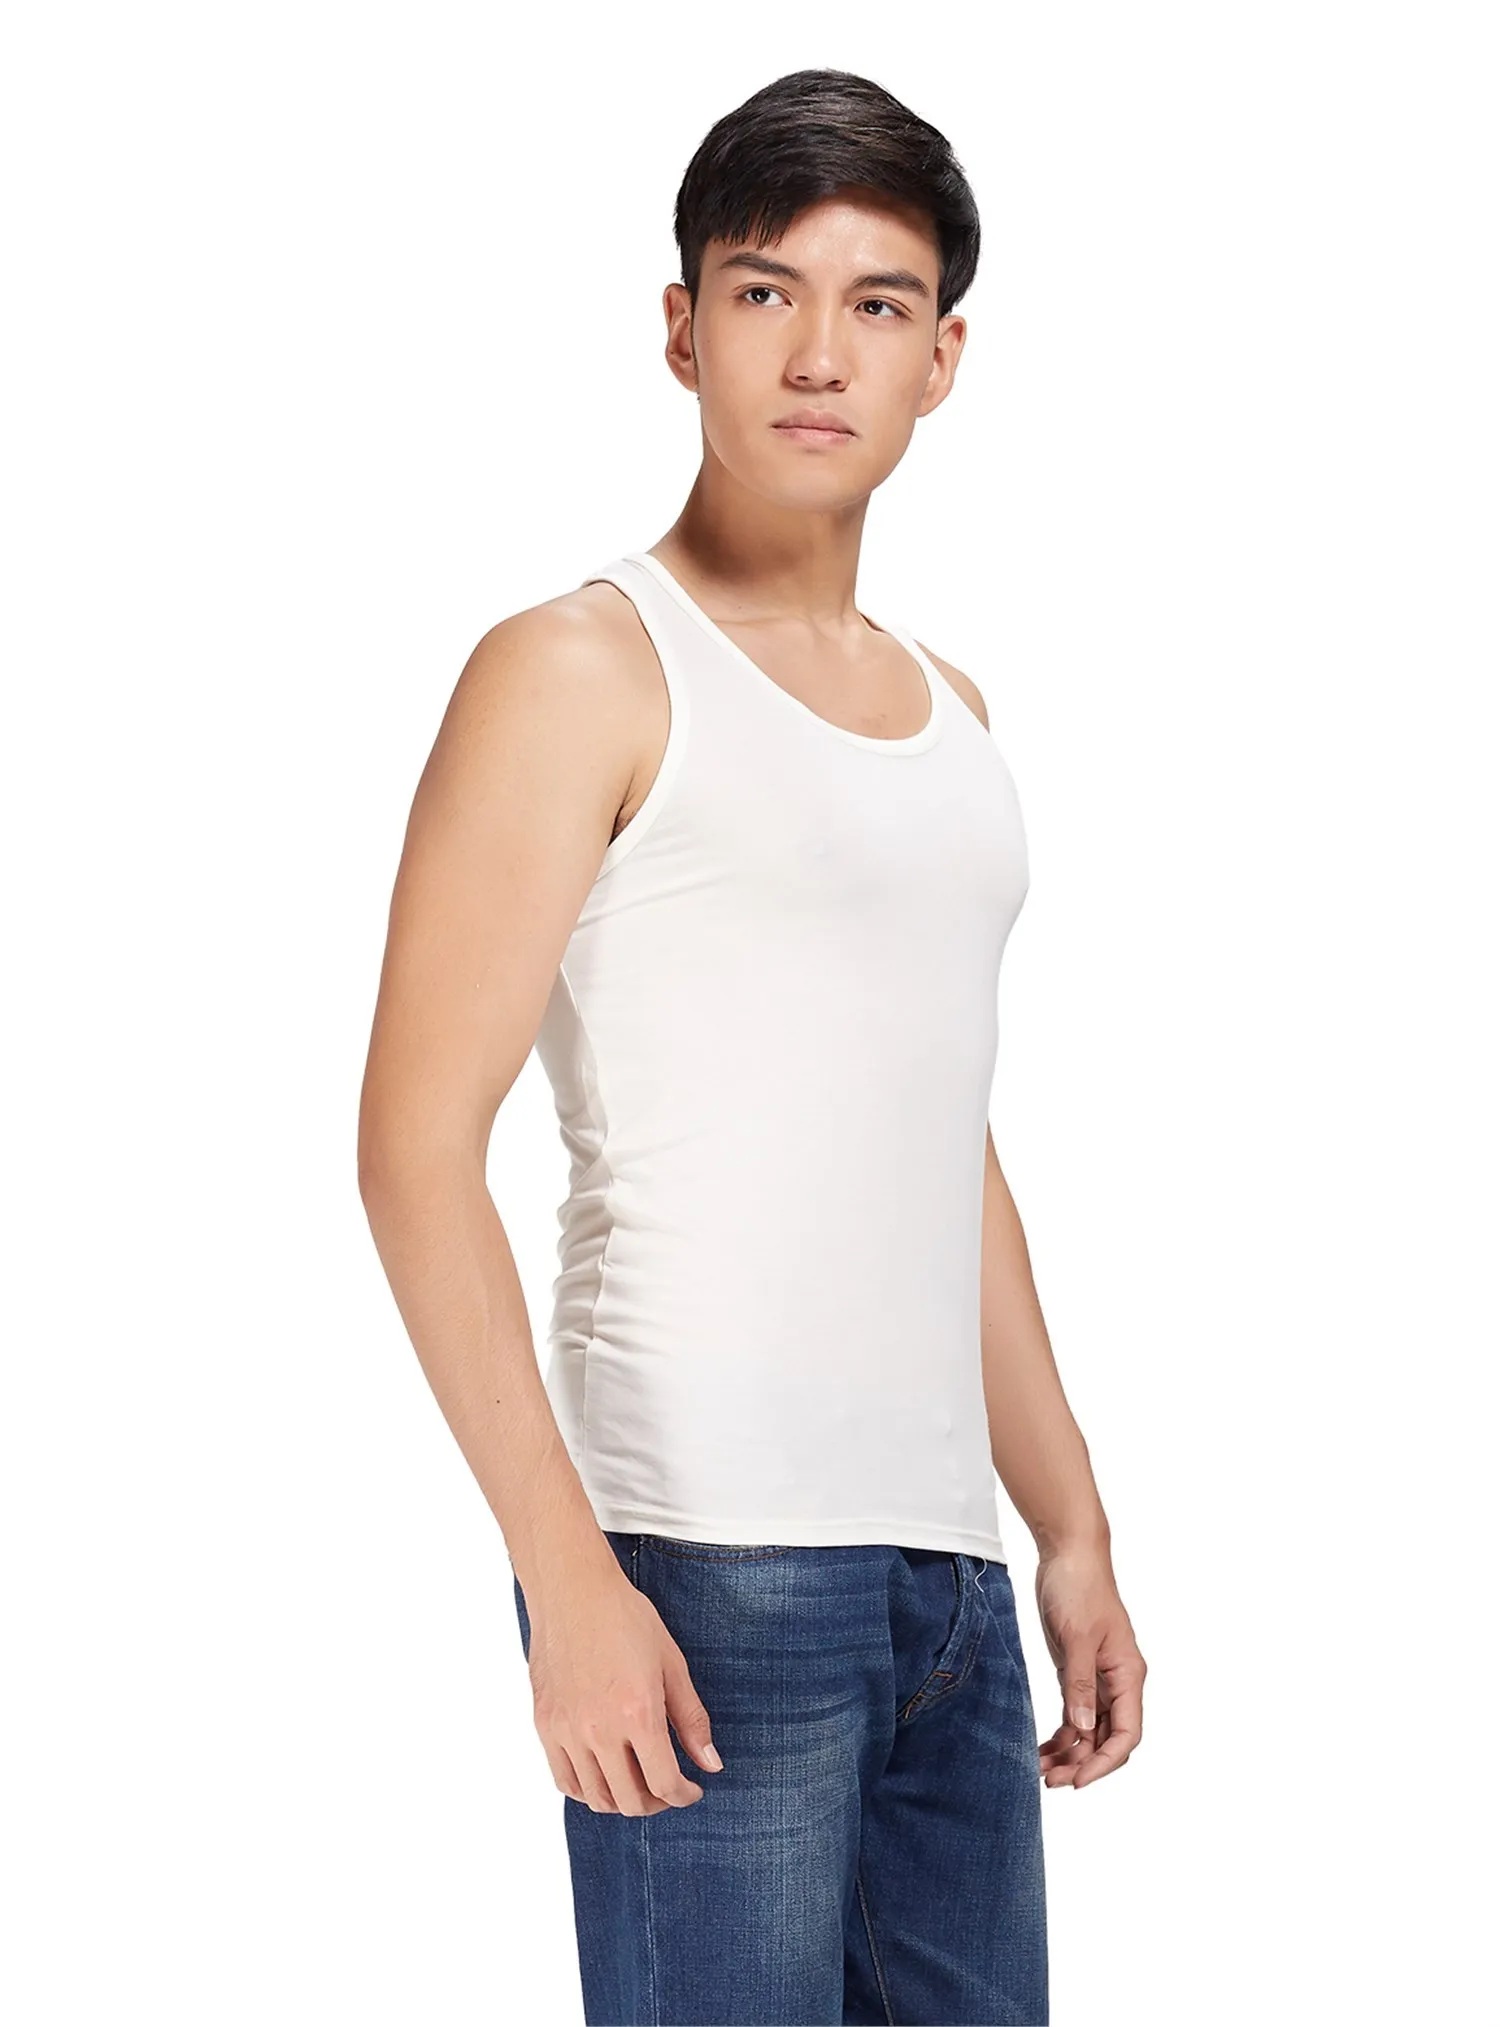 Men Shapewear Sweat Body Shaper Vest Slimmer Compression Thermal Top Fitness Workout Shirt